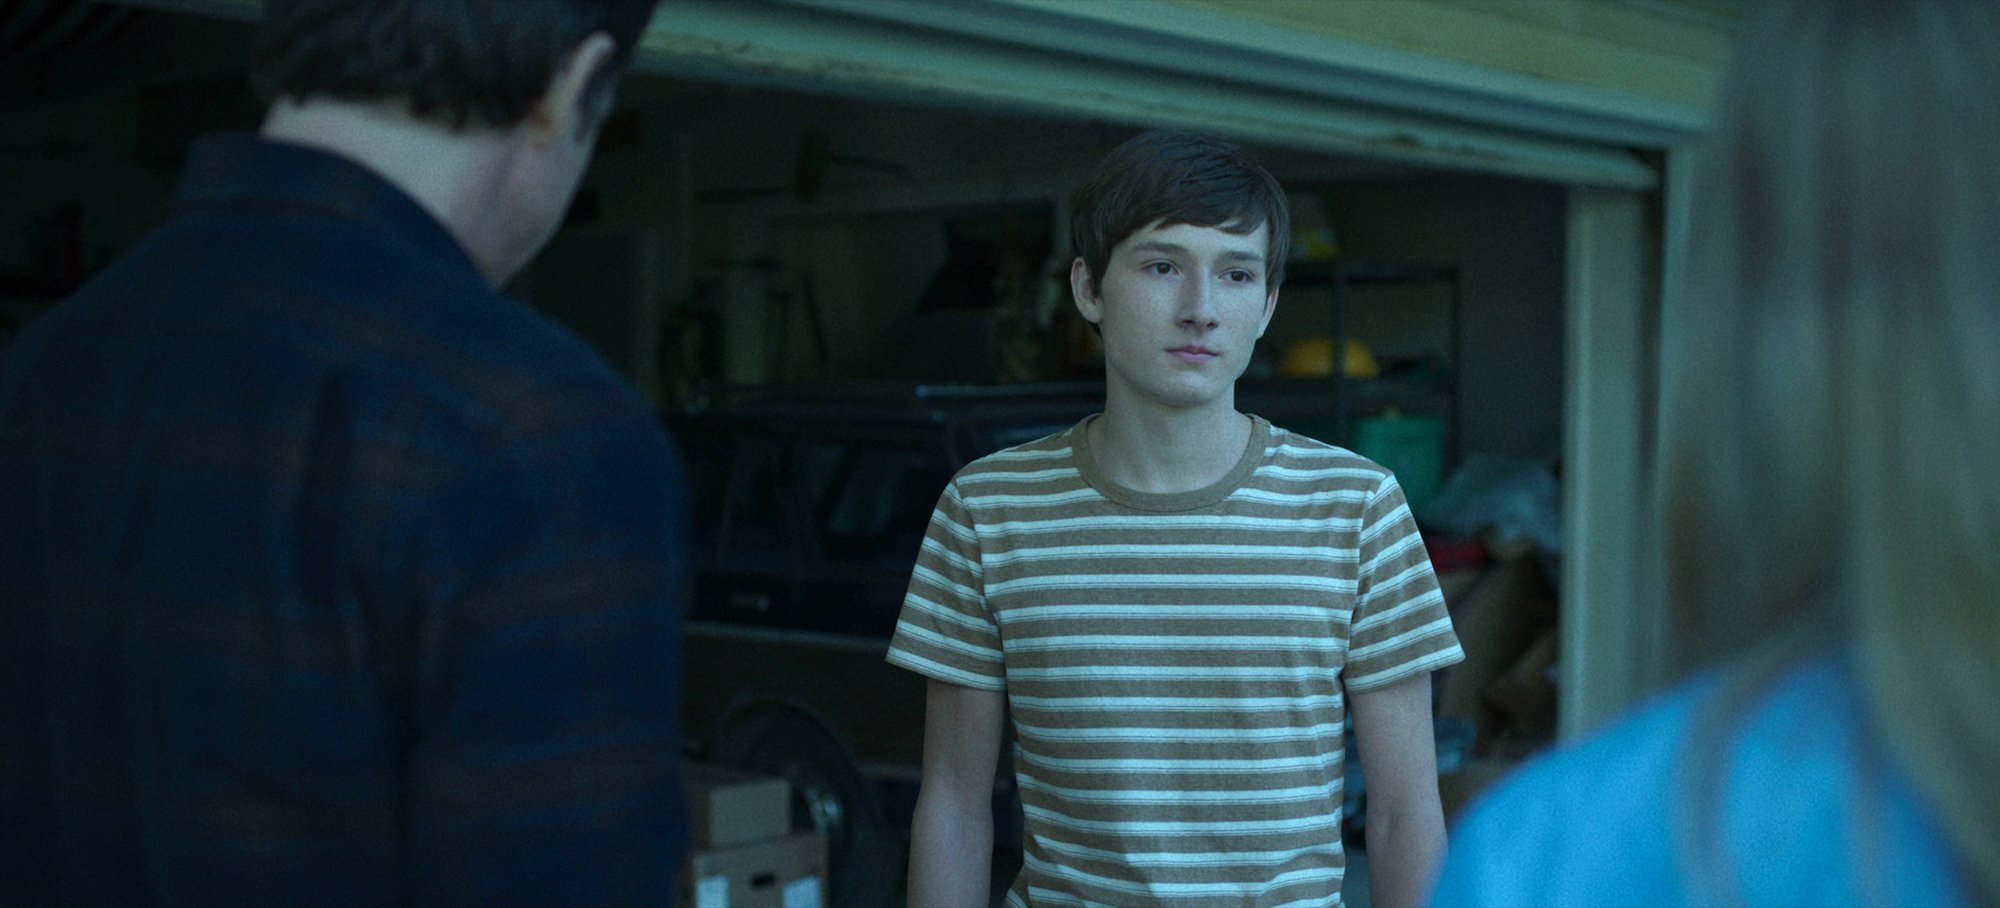 'Ozark' Season 4 star Skyler Gaertner as Jonah Byrde wearing a striped shirt in a production still from the series.